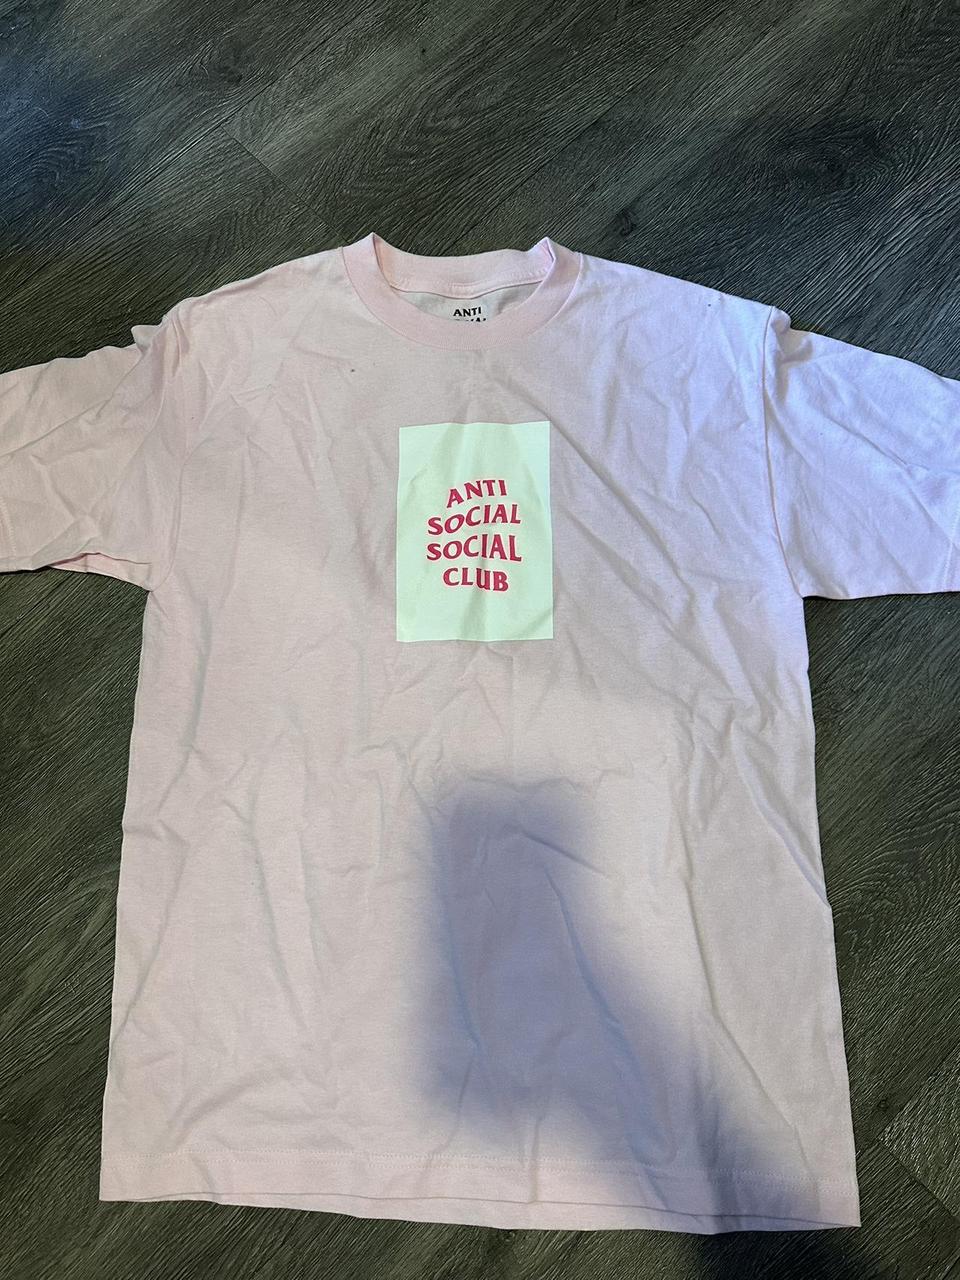 Anti Social Social Club Men's White and Pink T-shirt